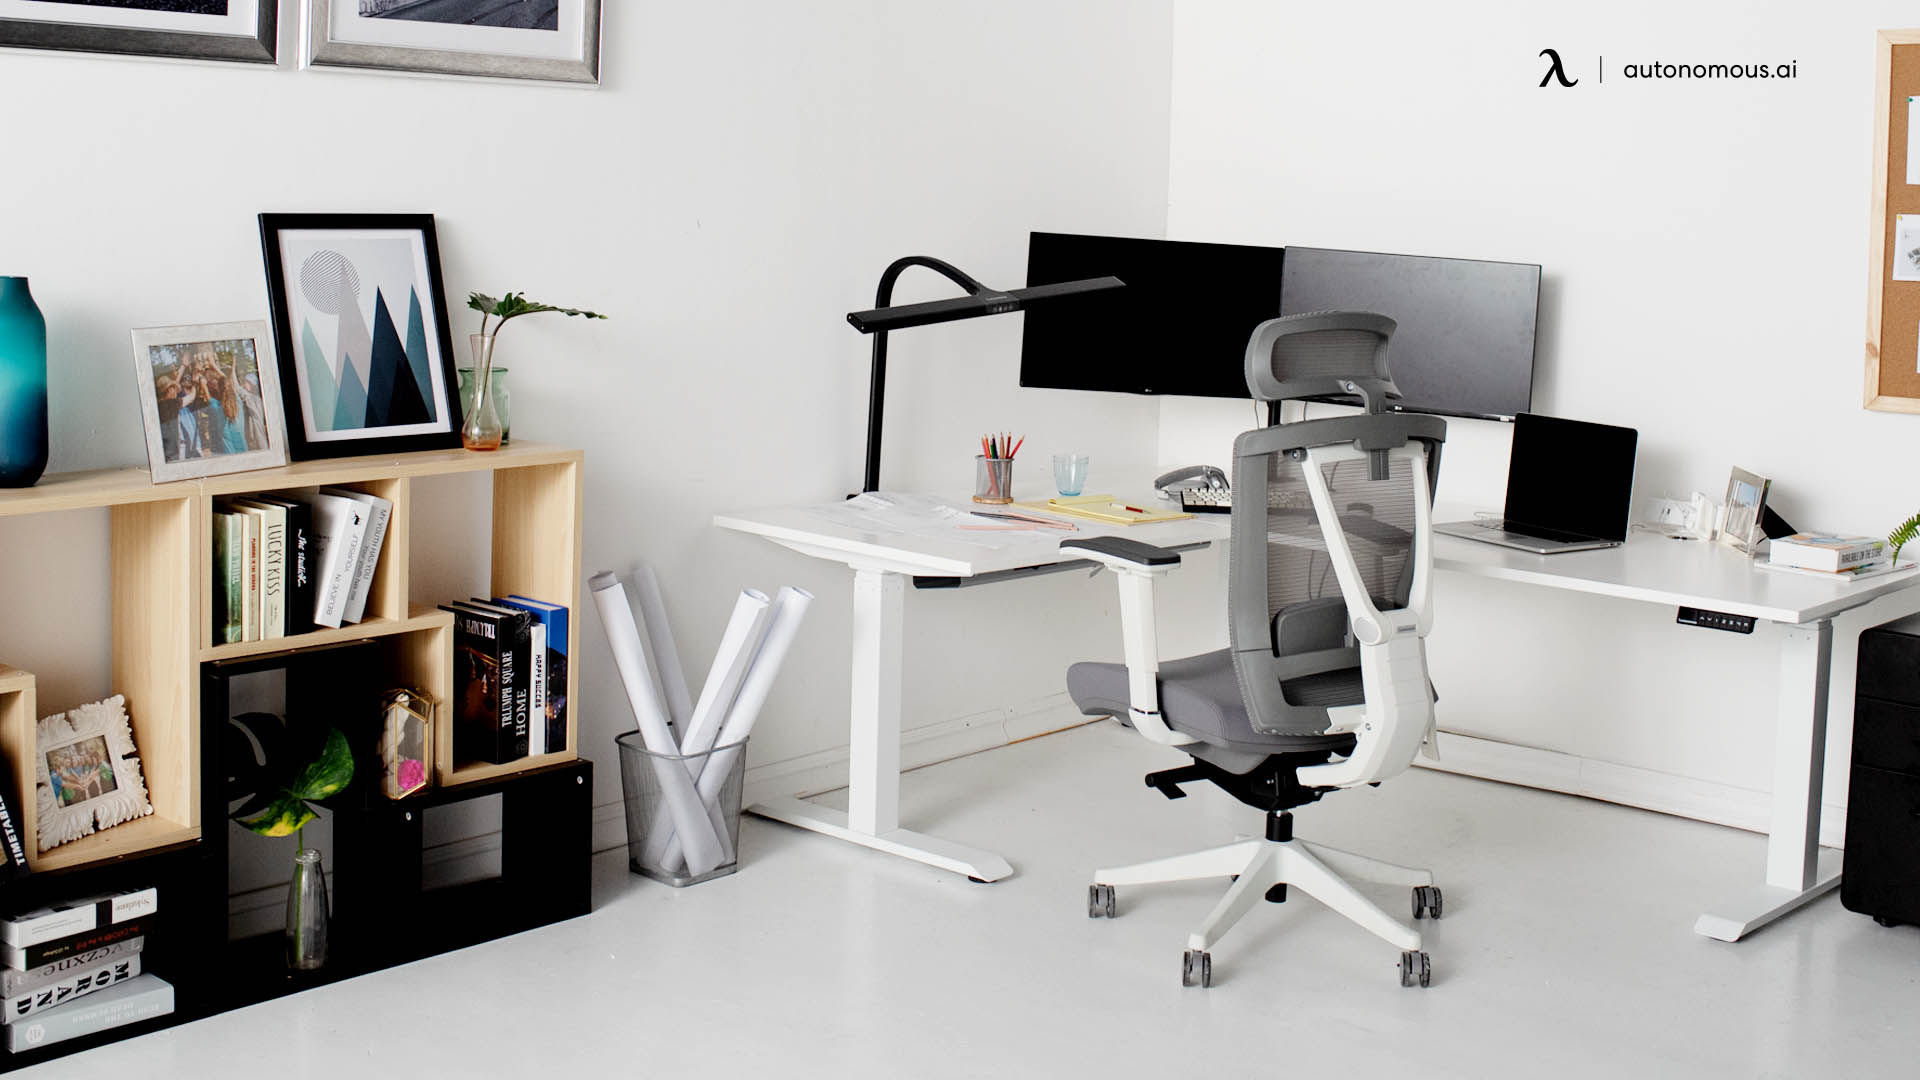 Consider Using an L-shaped Standing Desk